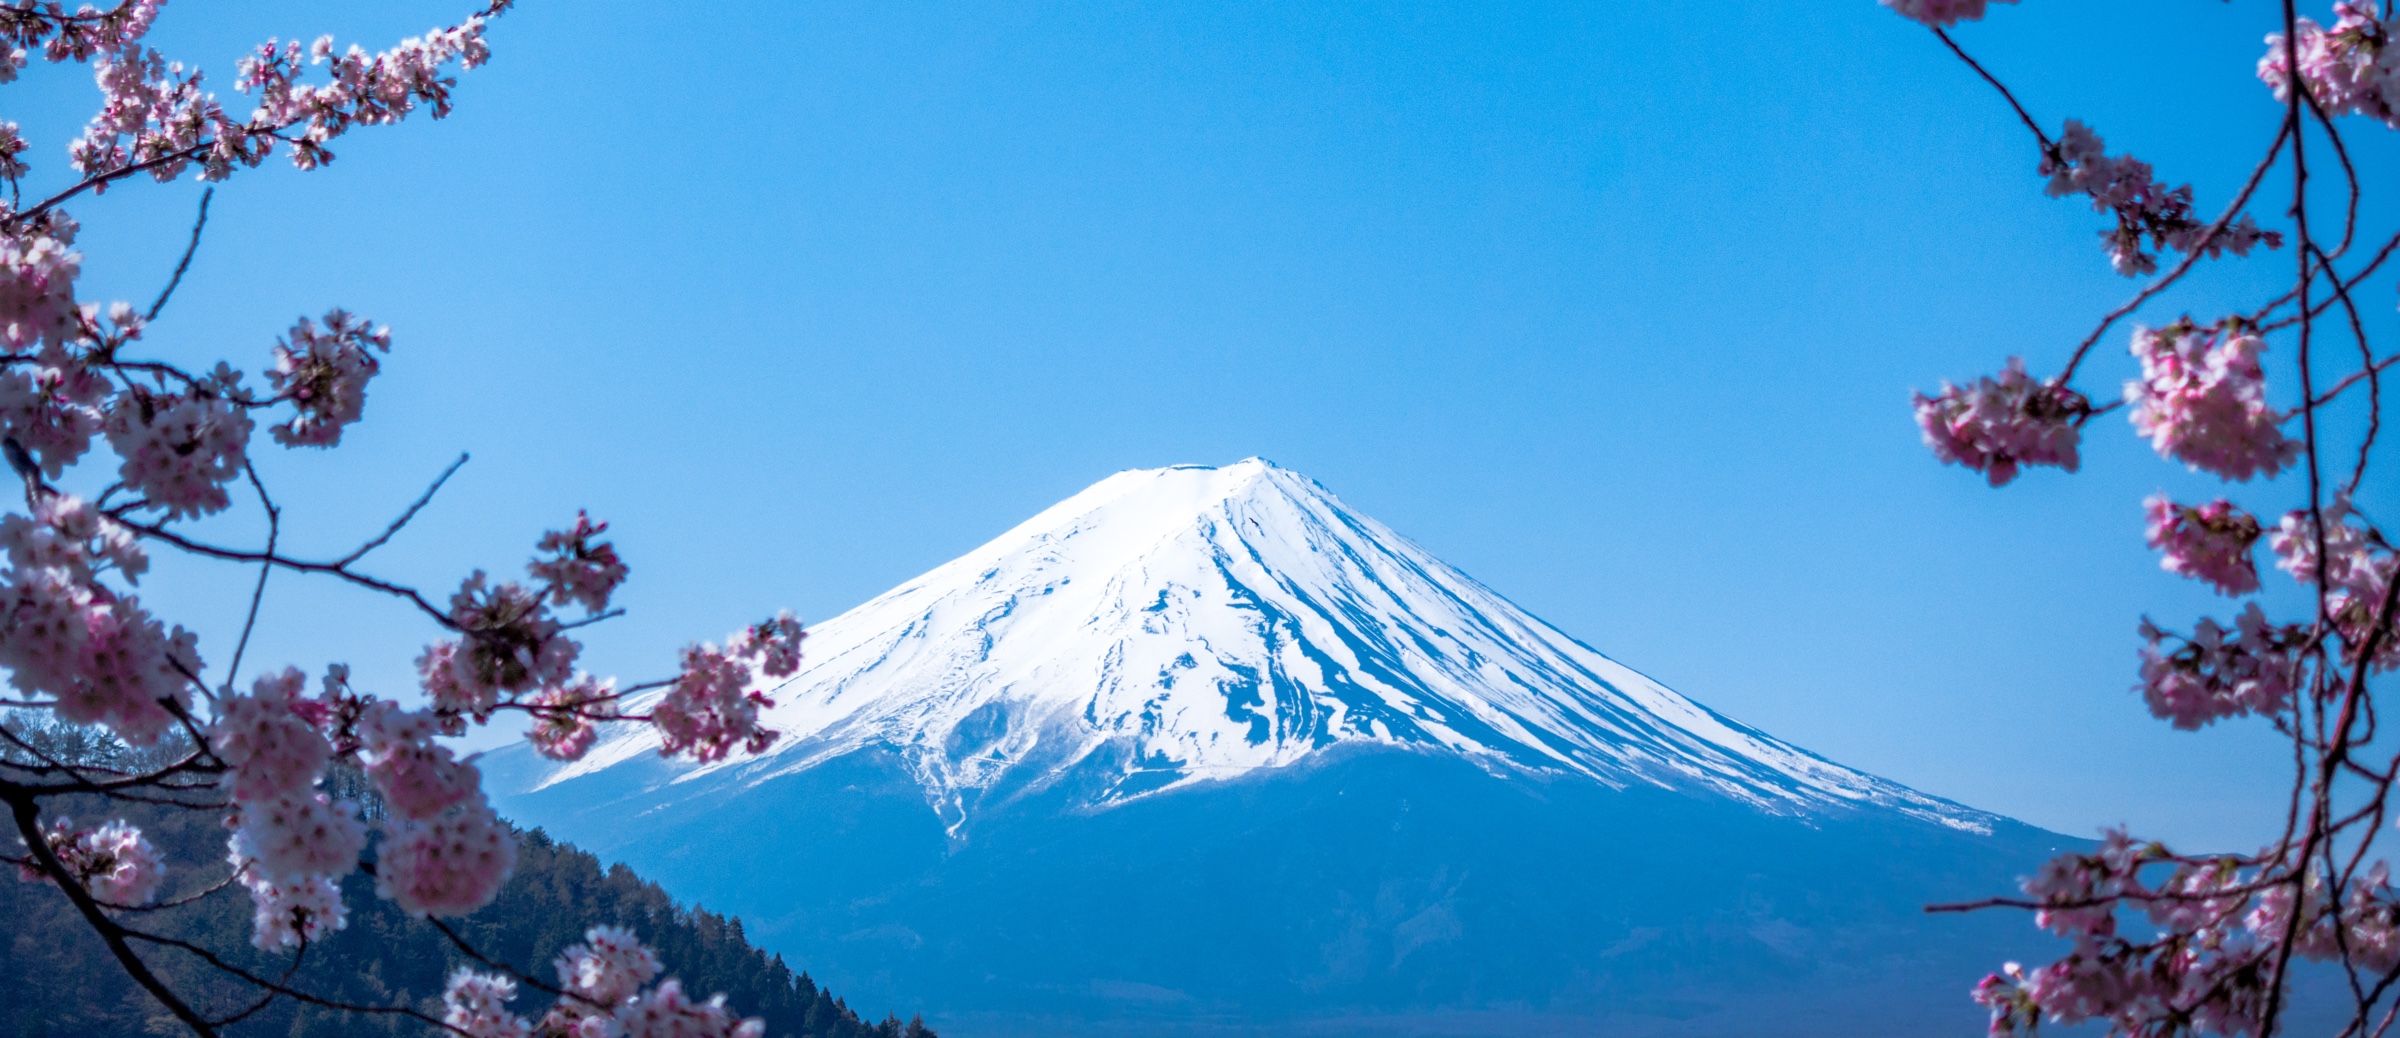 Mount Fuji in Japan Photo by JJ Ying